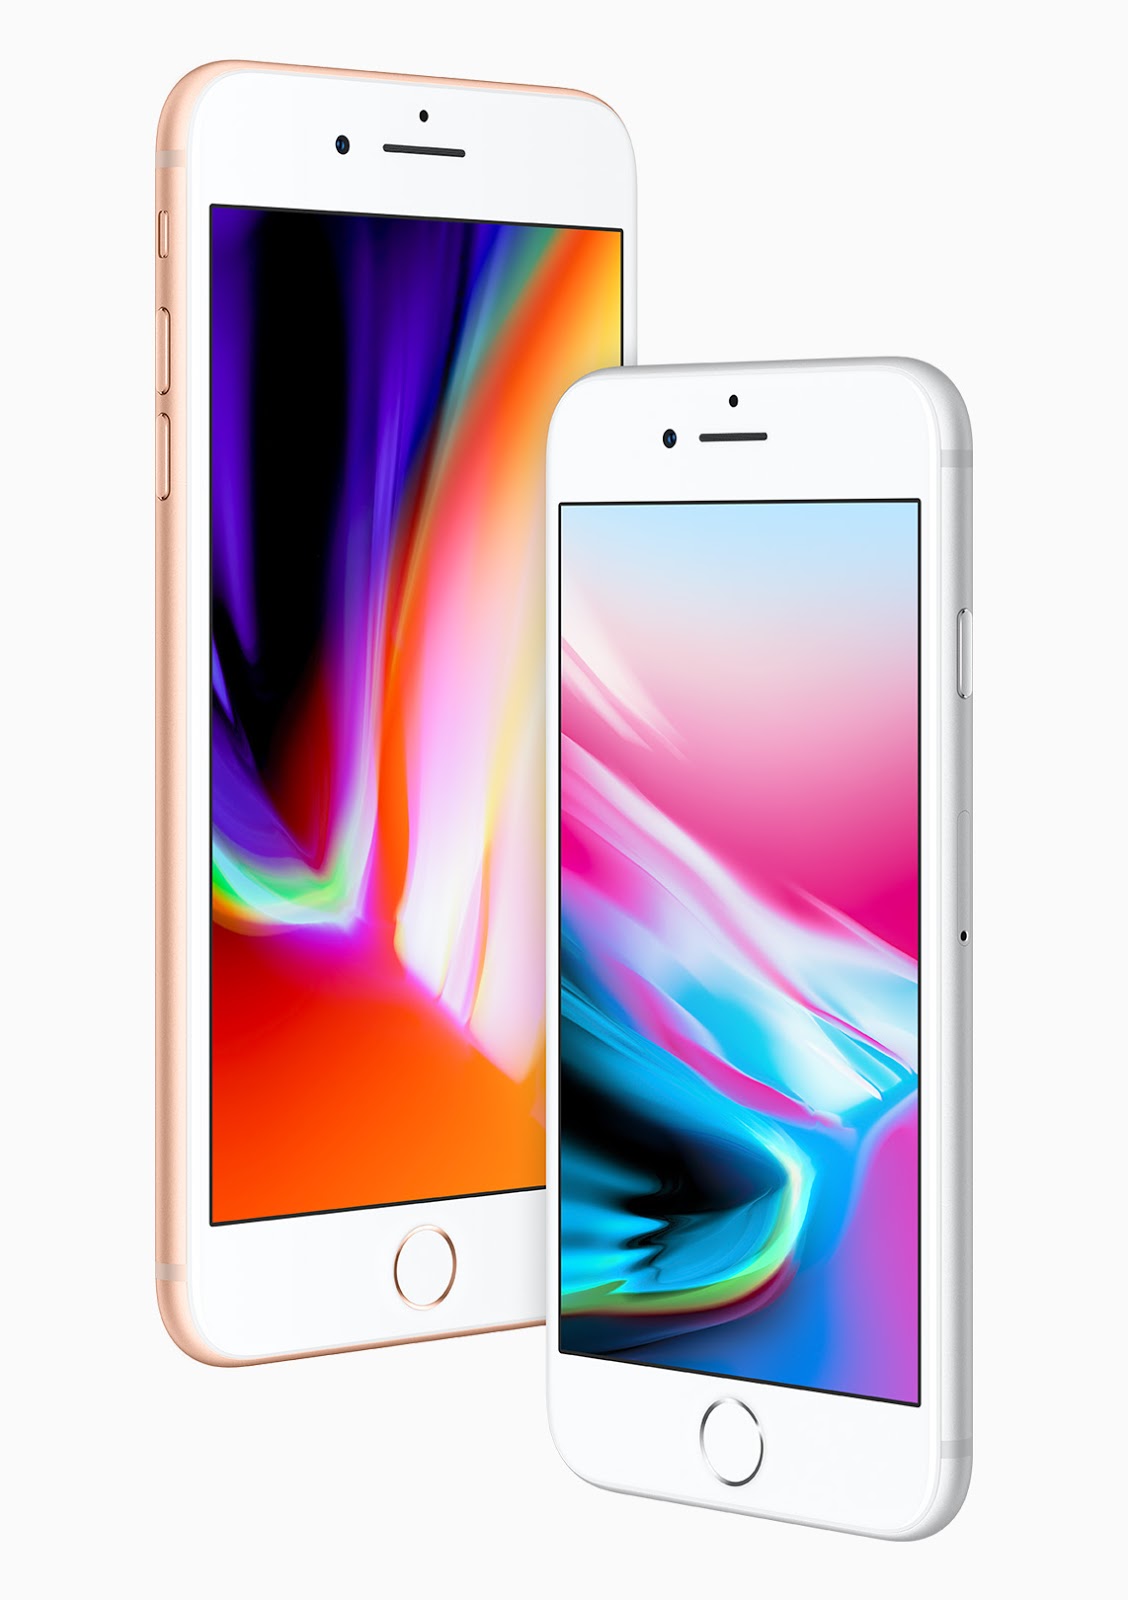 MasHD Apple iPhone 8 , 8 Plus and iPhone X announced